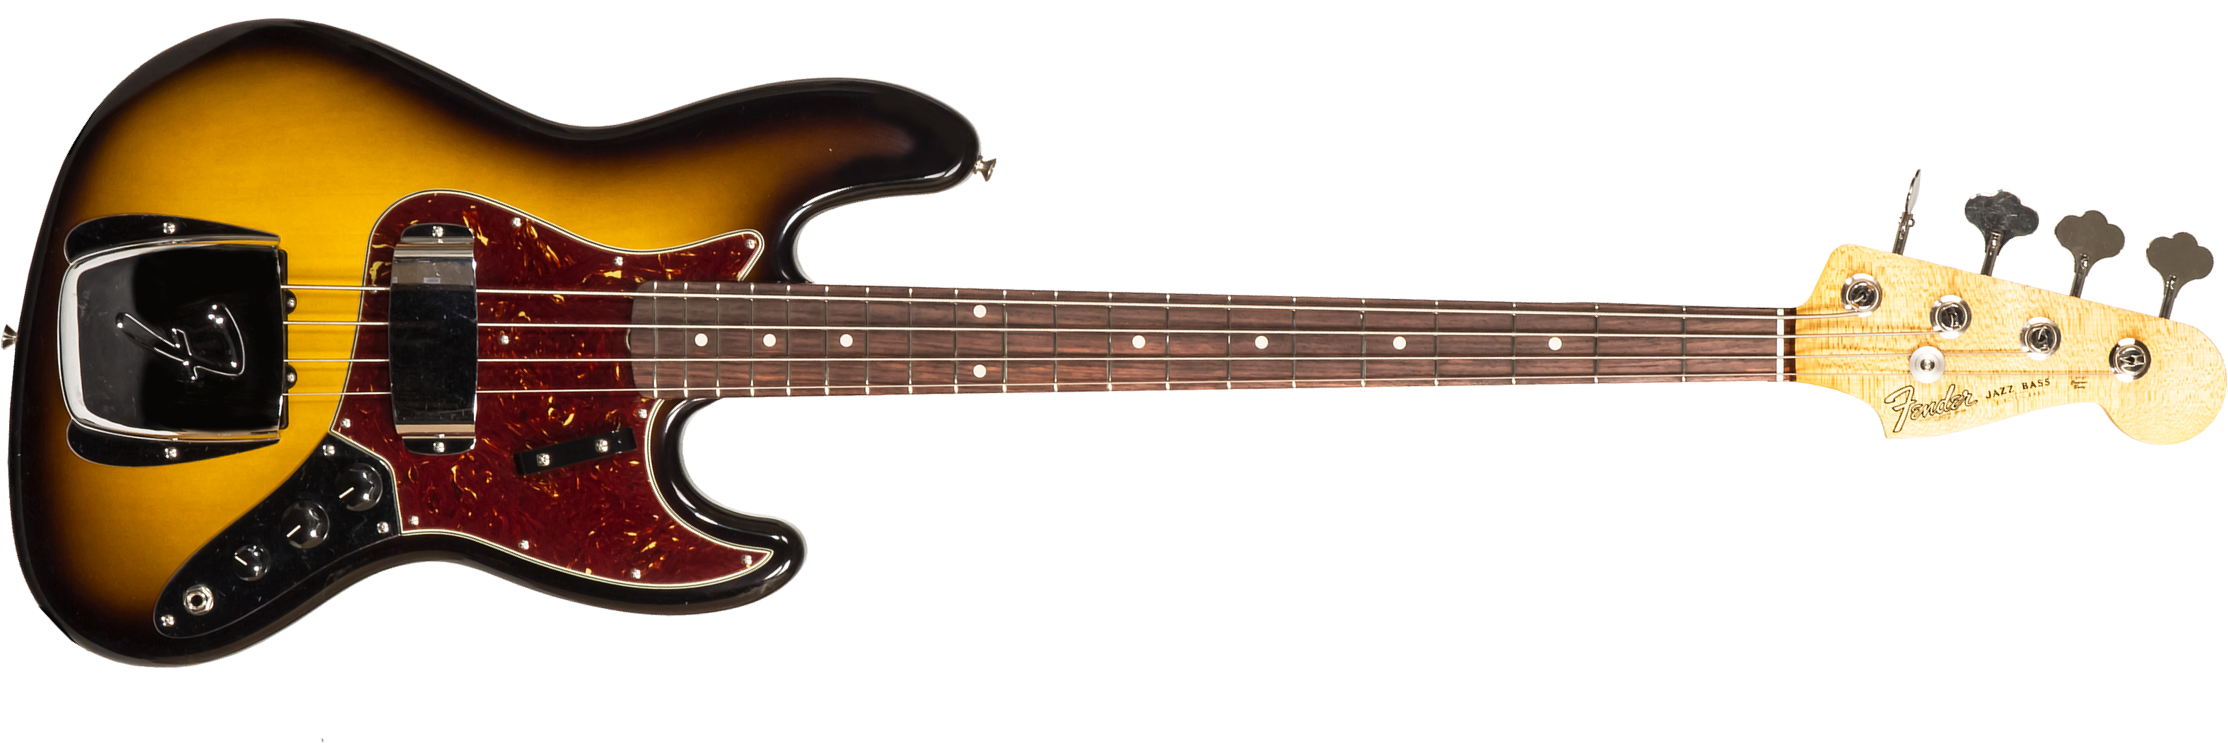 Fender Custom Shop Jazz Bass 1964 Rw #r126513 - Closet Classic 2-color Sunburst - Solid body electric bass - Main picture